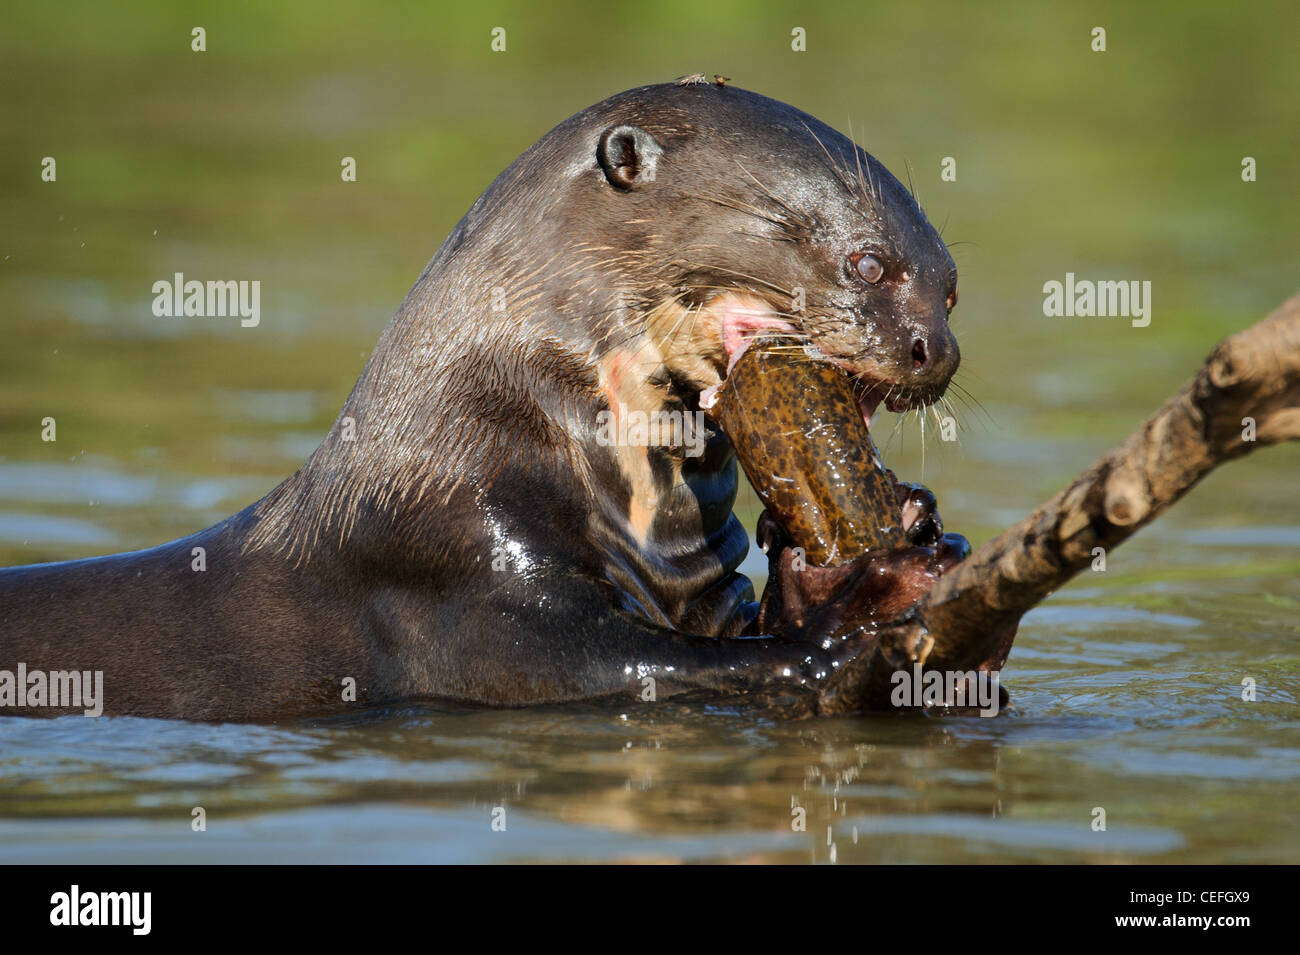 A wild Giant River Otter feeding on fish Stock Photo